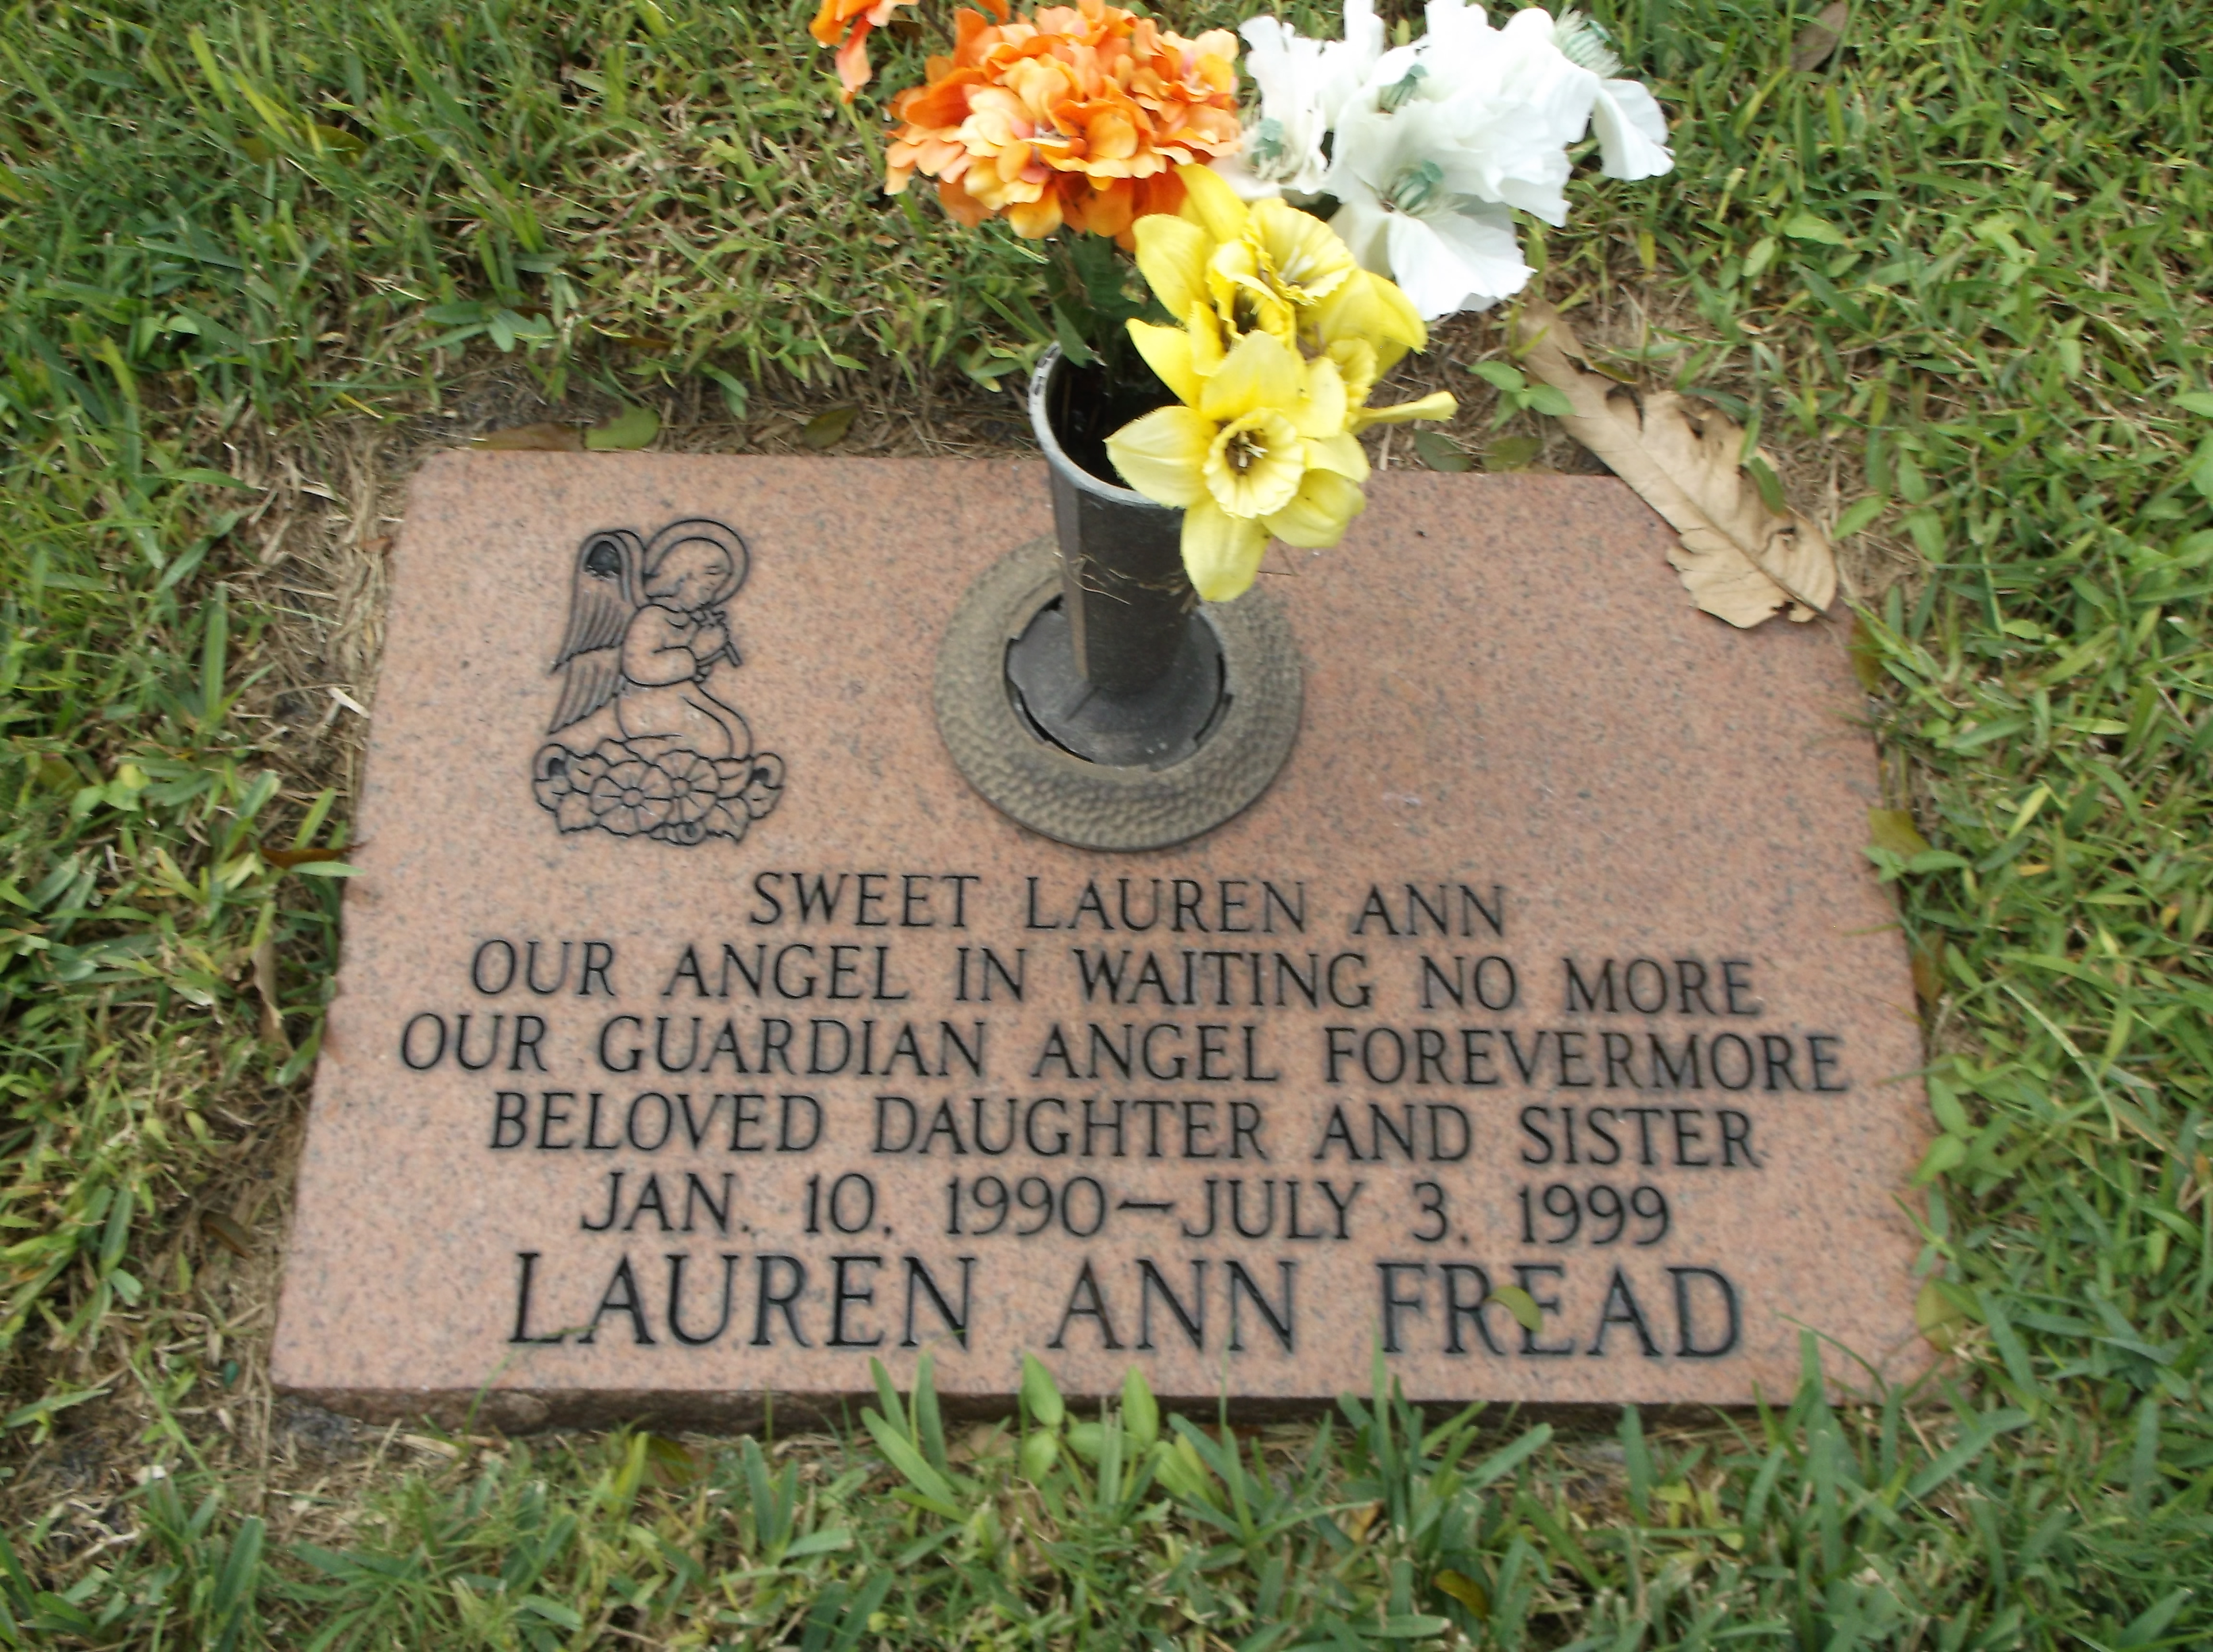 Lauren Ann Fread